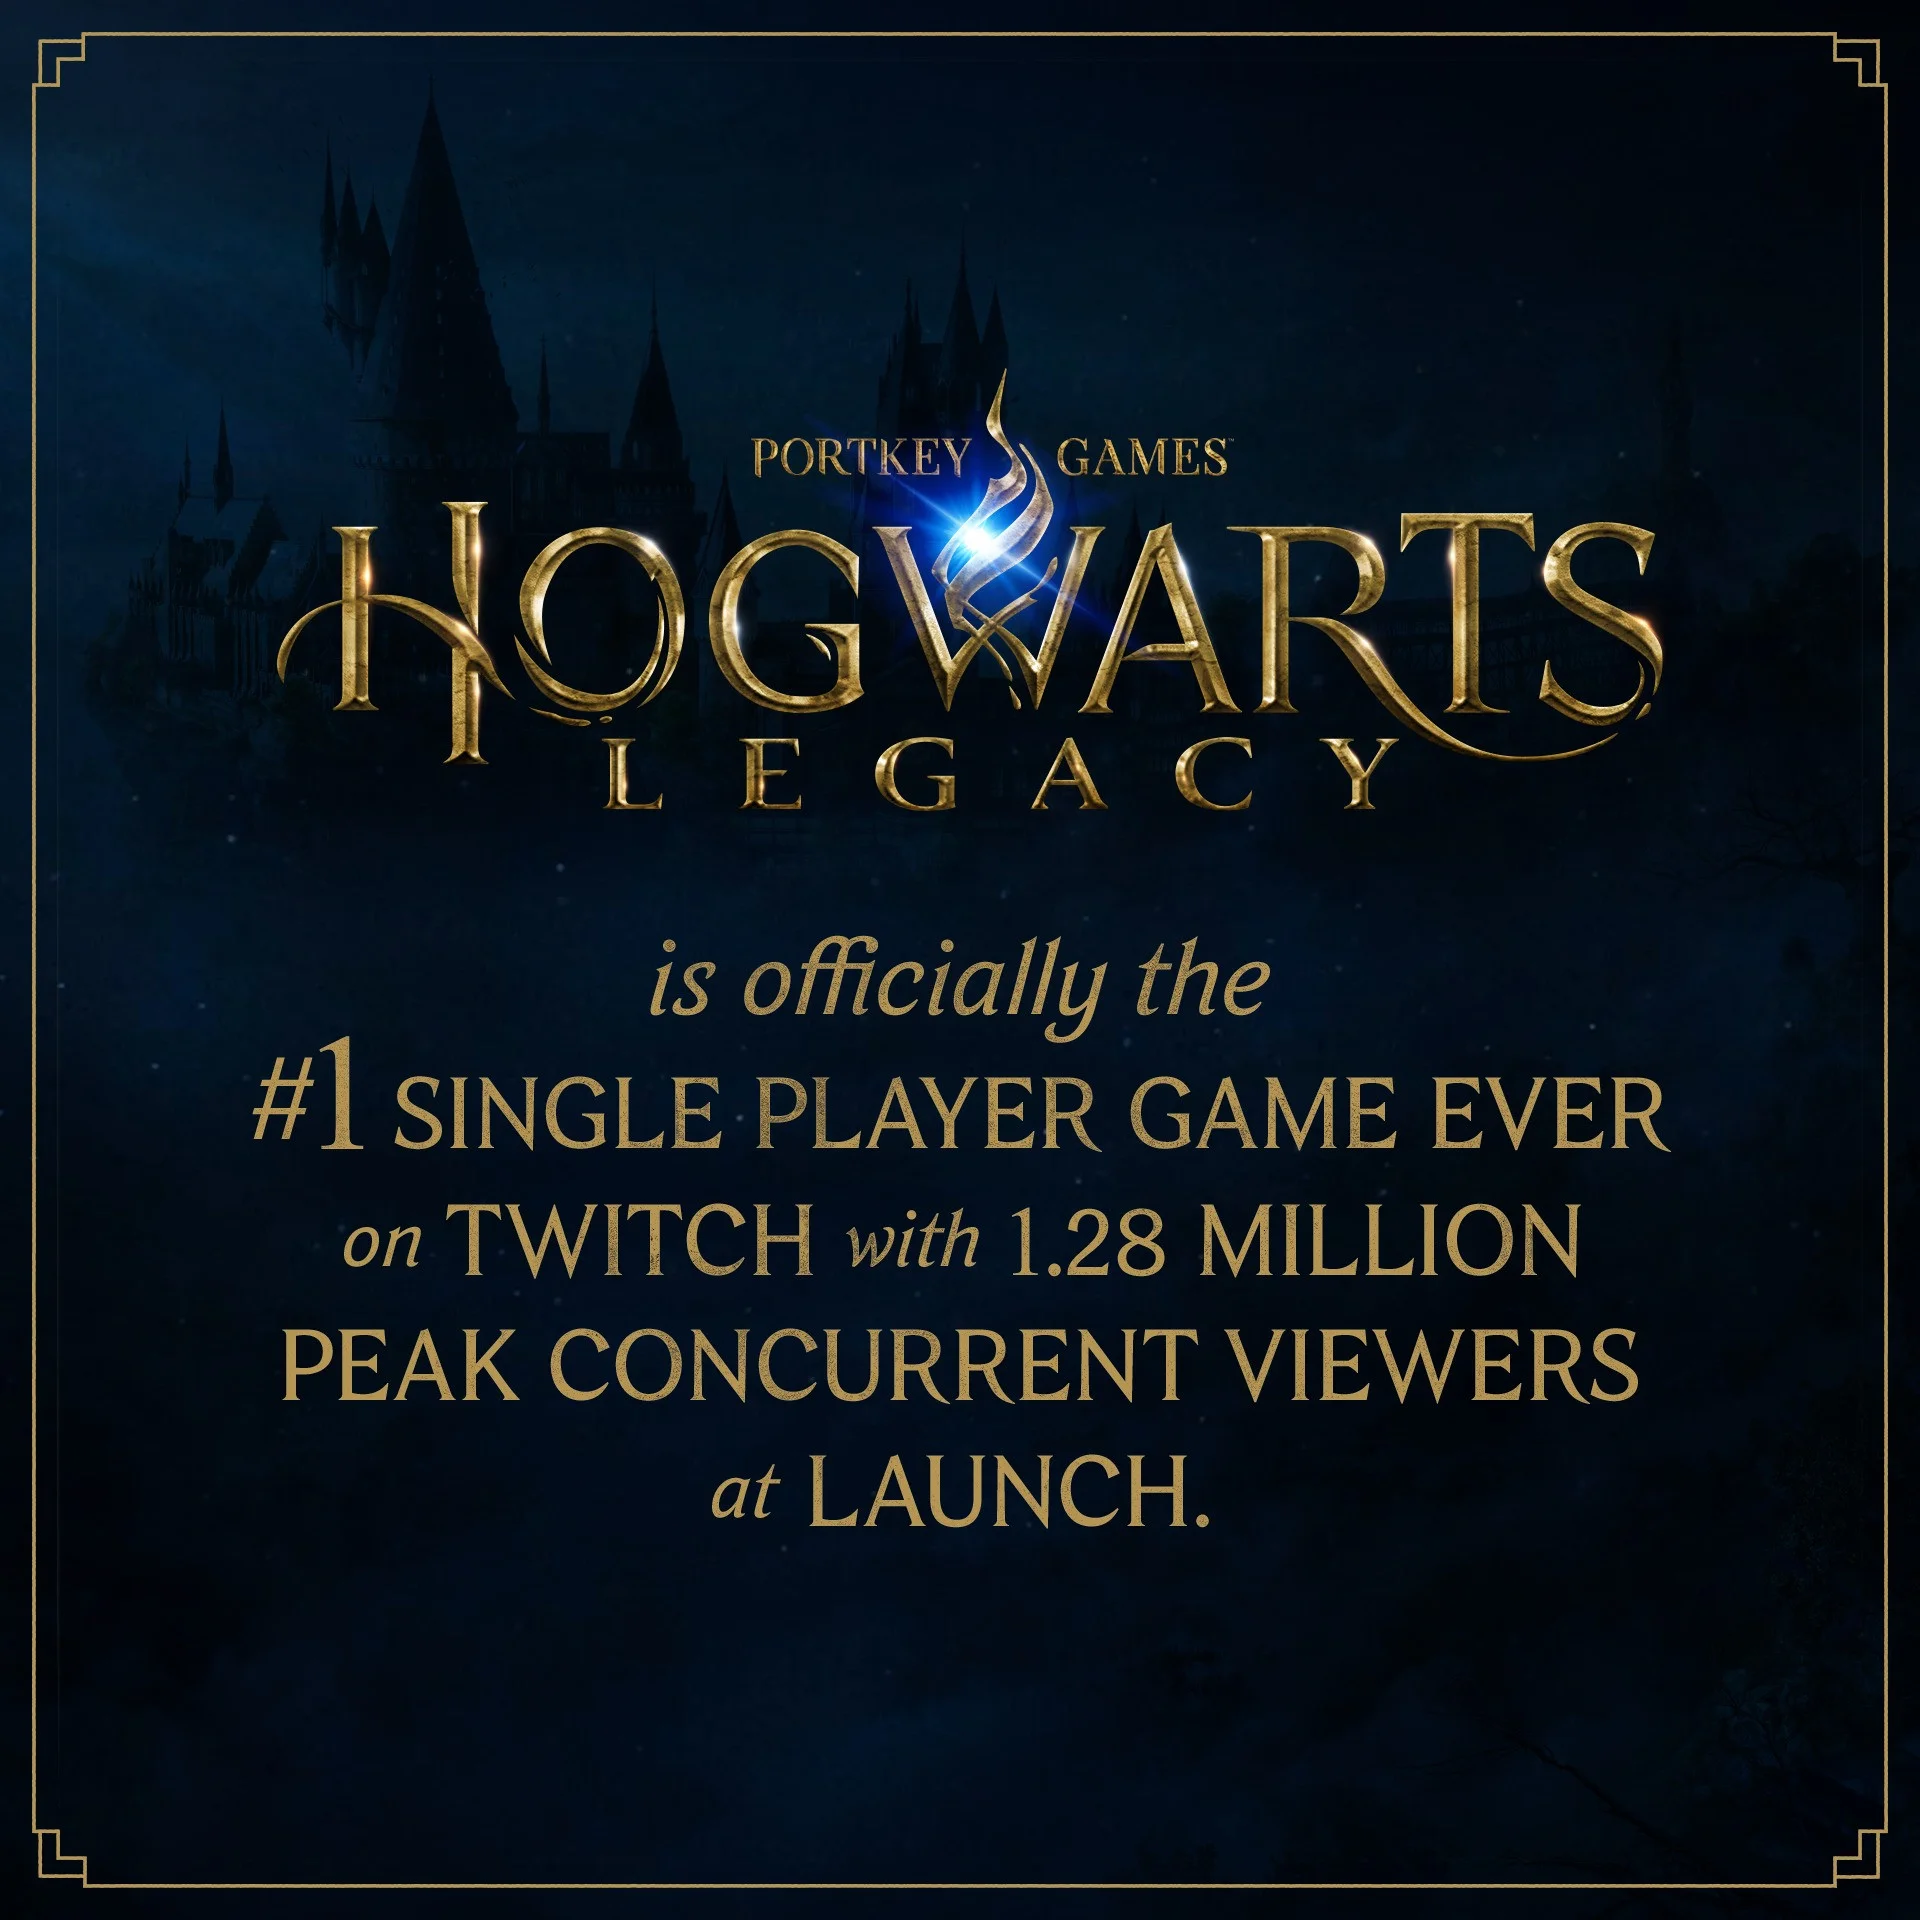 Hogwarts Legacy установила рекорд среди одиночных игр на Twitch - фото 1